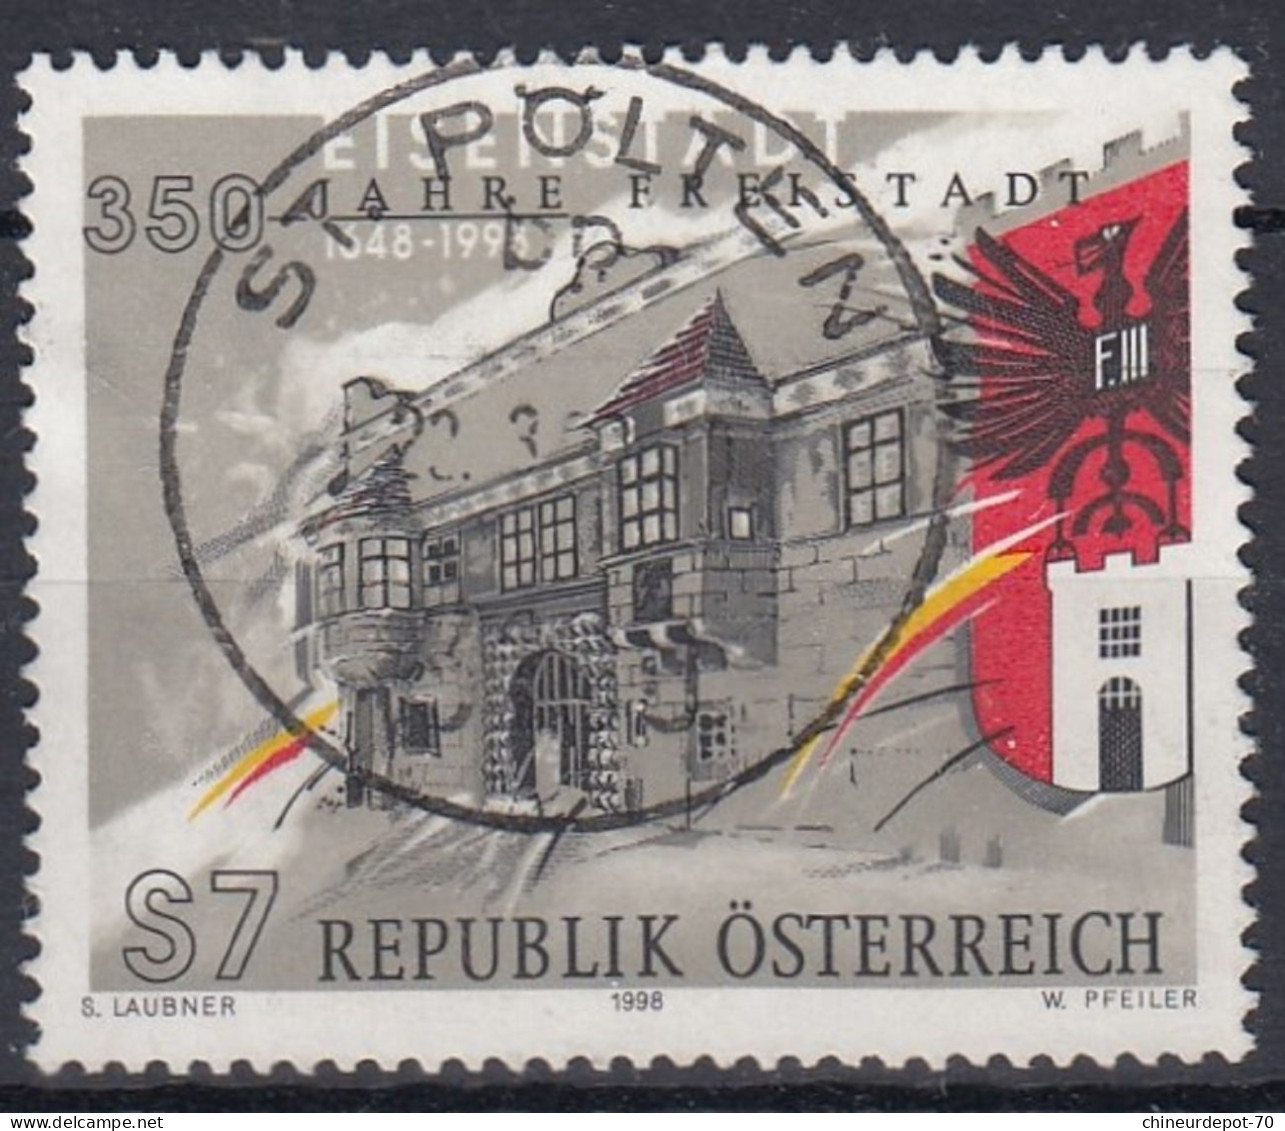 S7 REPUBLIK ÖSTERREICH S LAUBNER 1998 W PFEILER Cachet Sankt Polten - Gebruikt